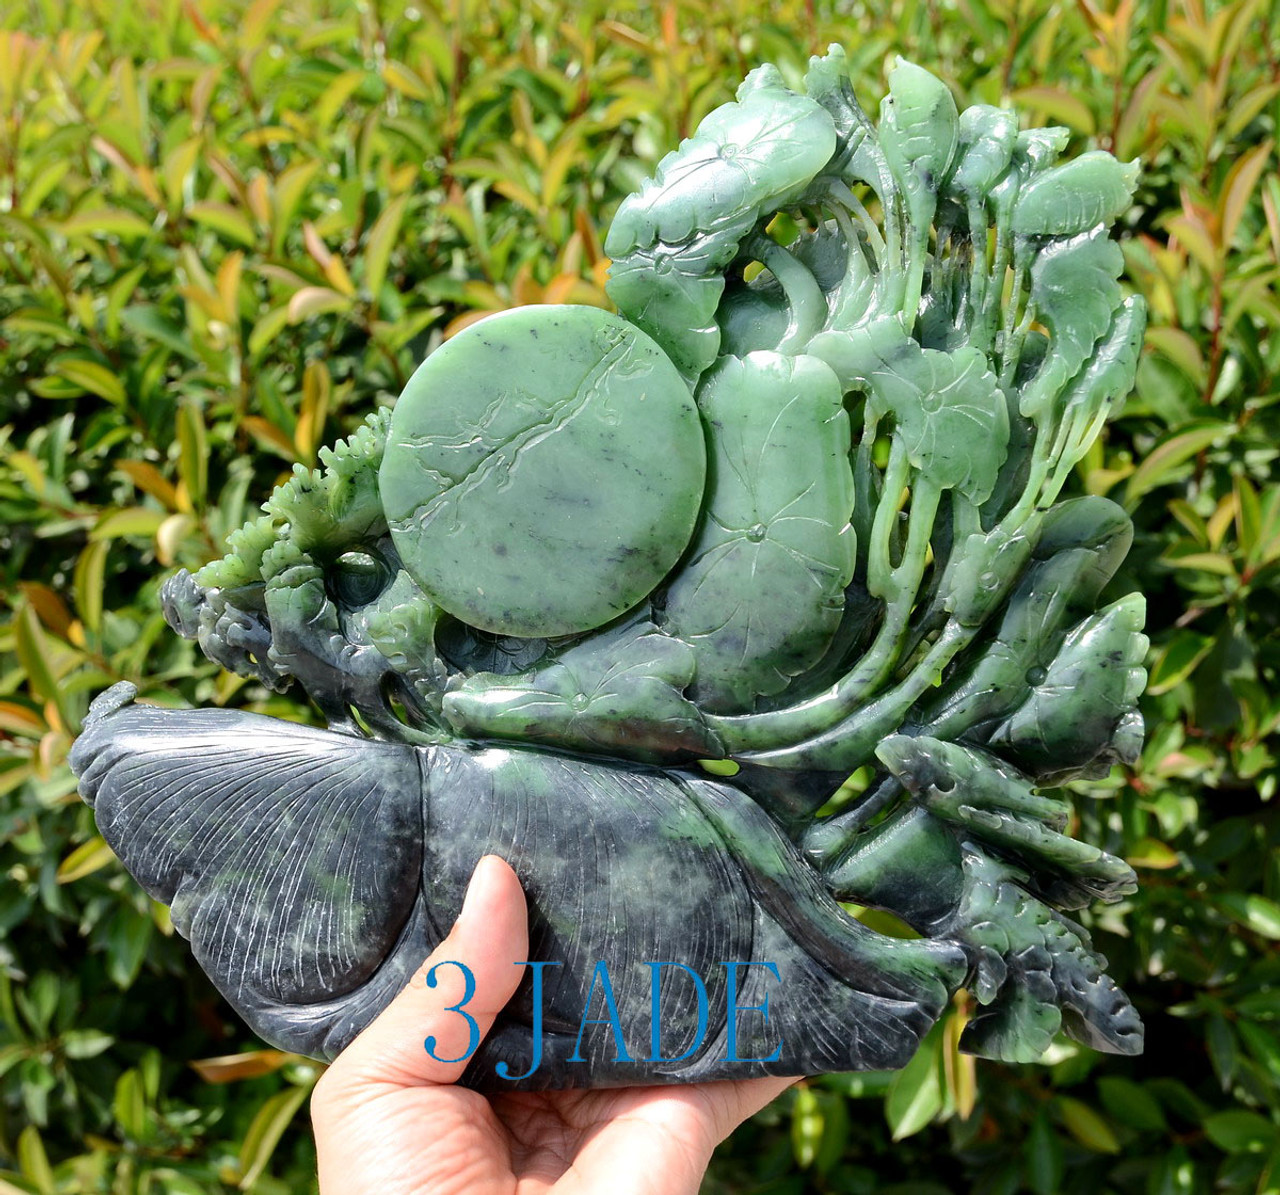 Green Nephrite Jade Lotus Seed Pod/Flower & Fish Sculpture East Asia/Chinese Artwork